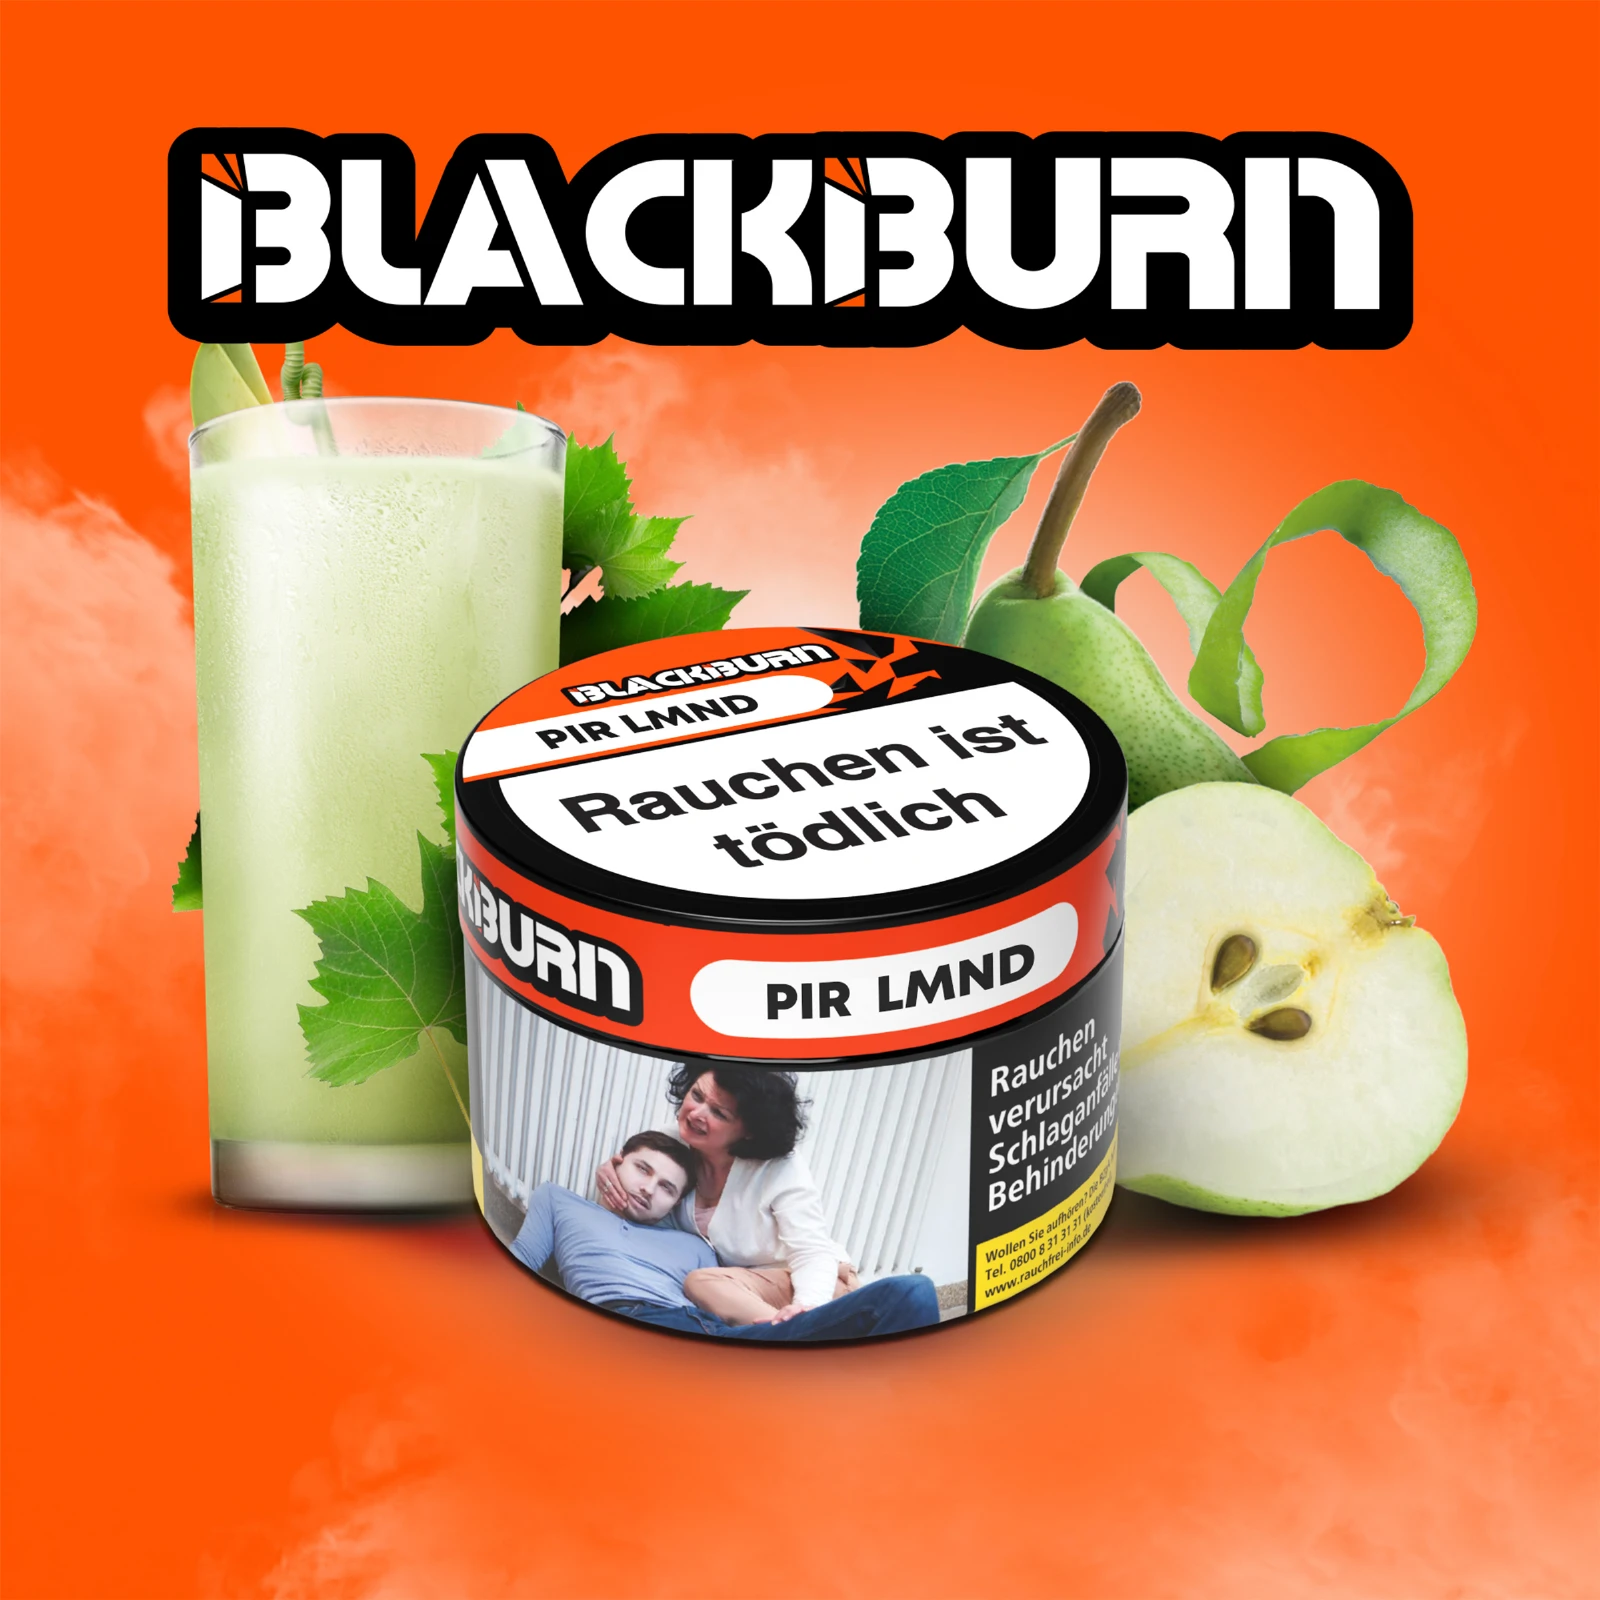 Blackburn Shisha-Tabak Pir Lmnd 25 g | Neue Sorten günstig kaufen 1